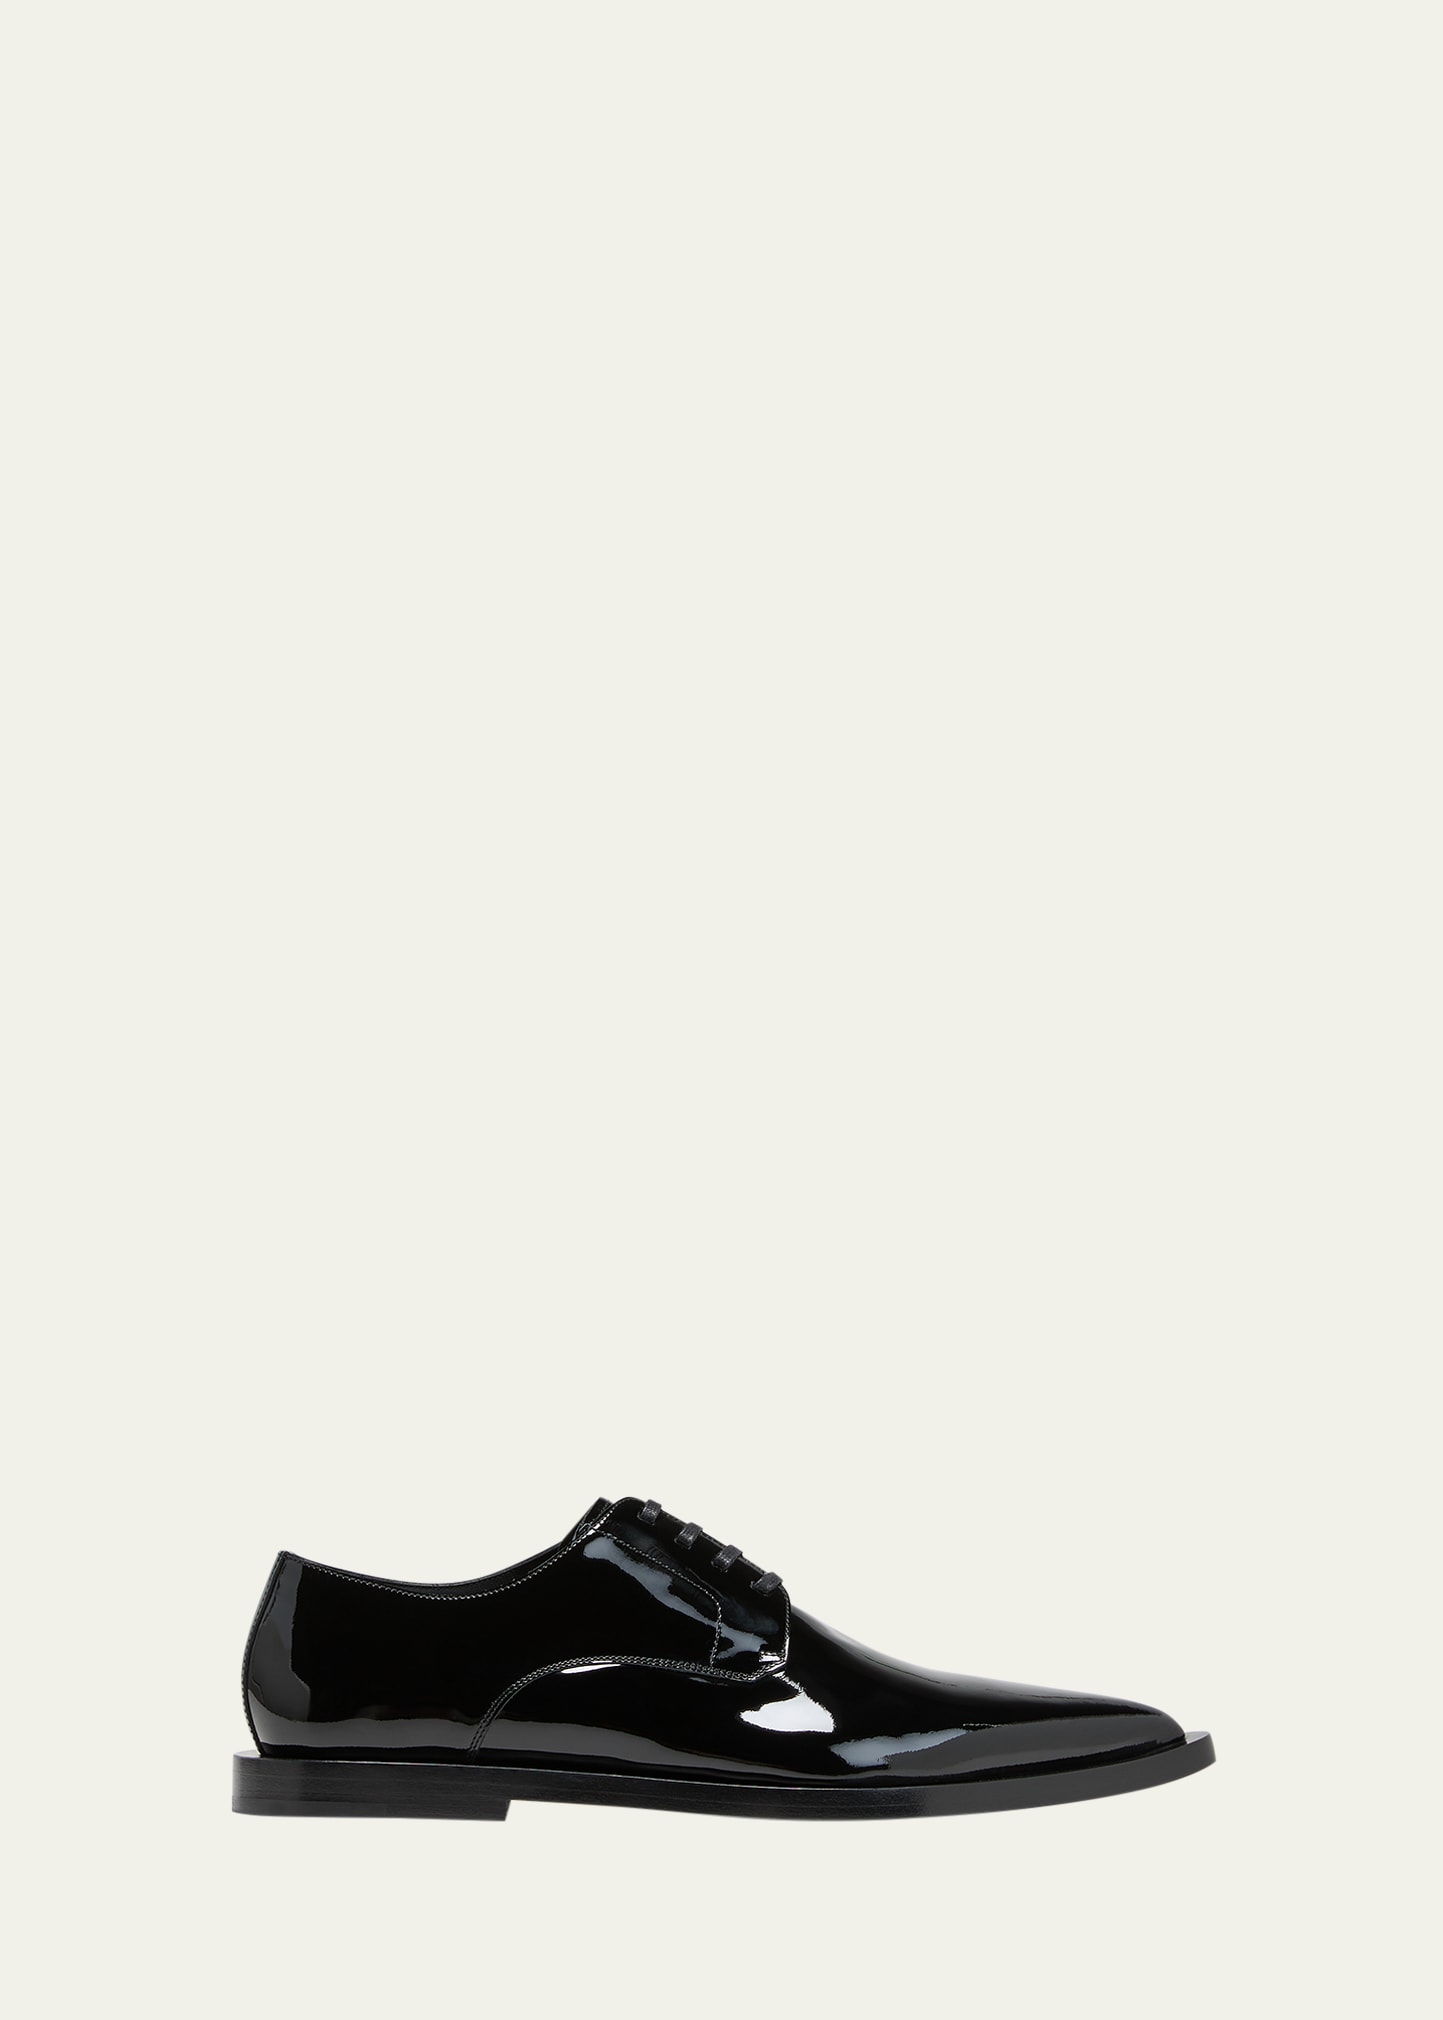 Men's Vernice Patent Leather Derby Shoes